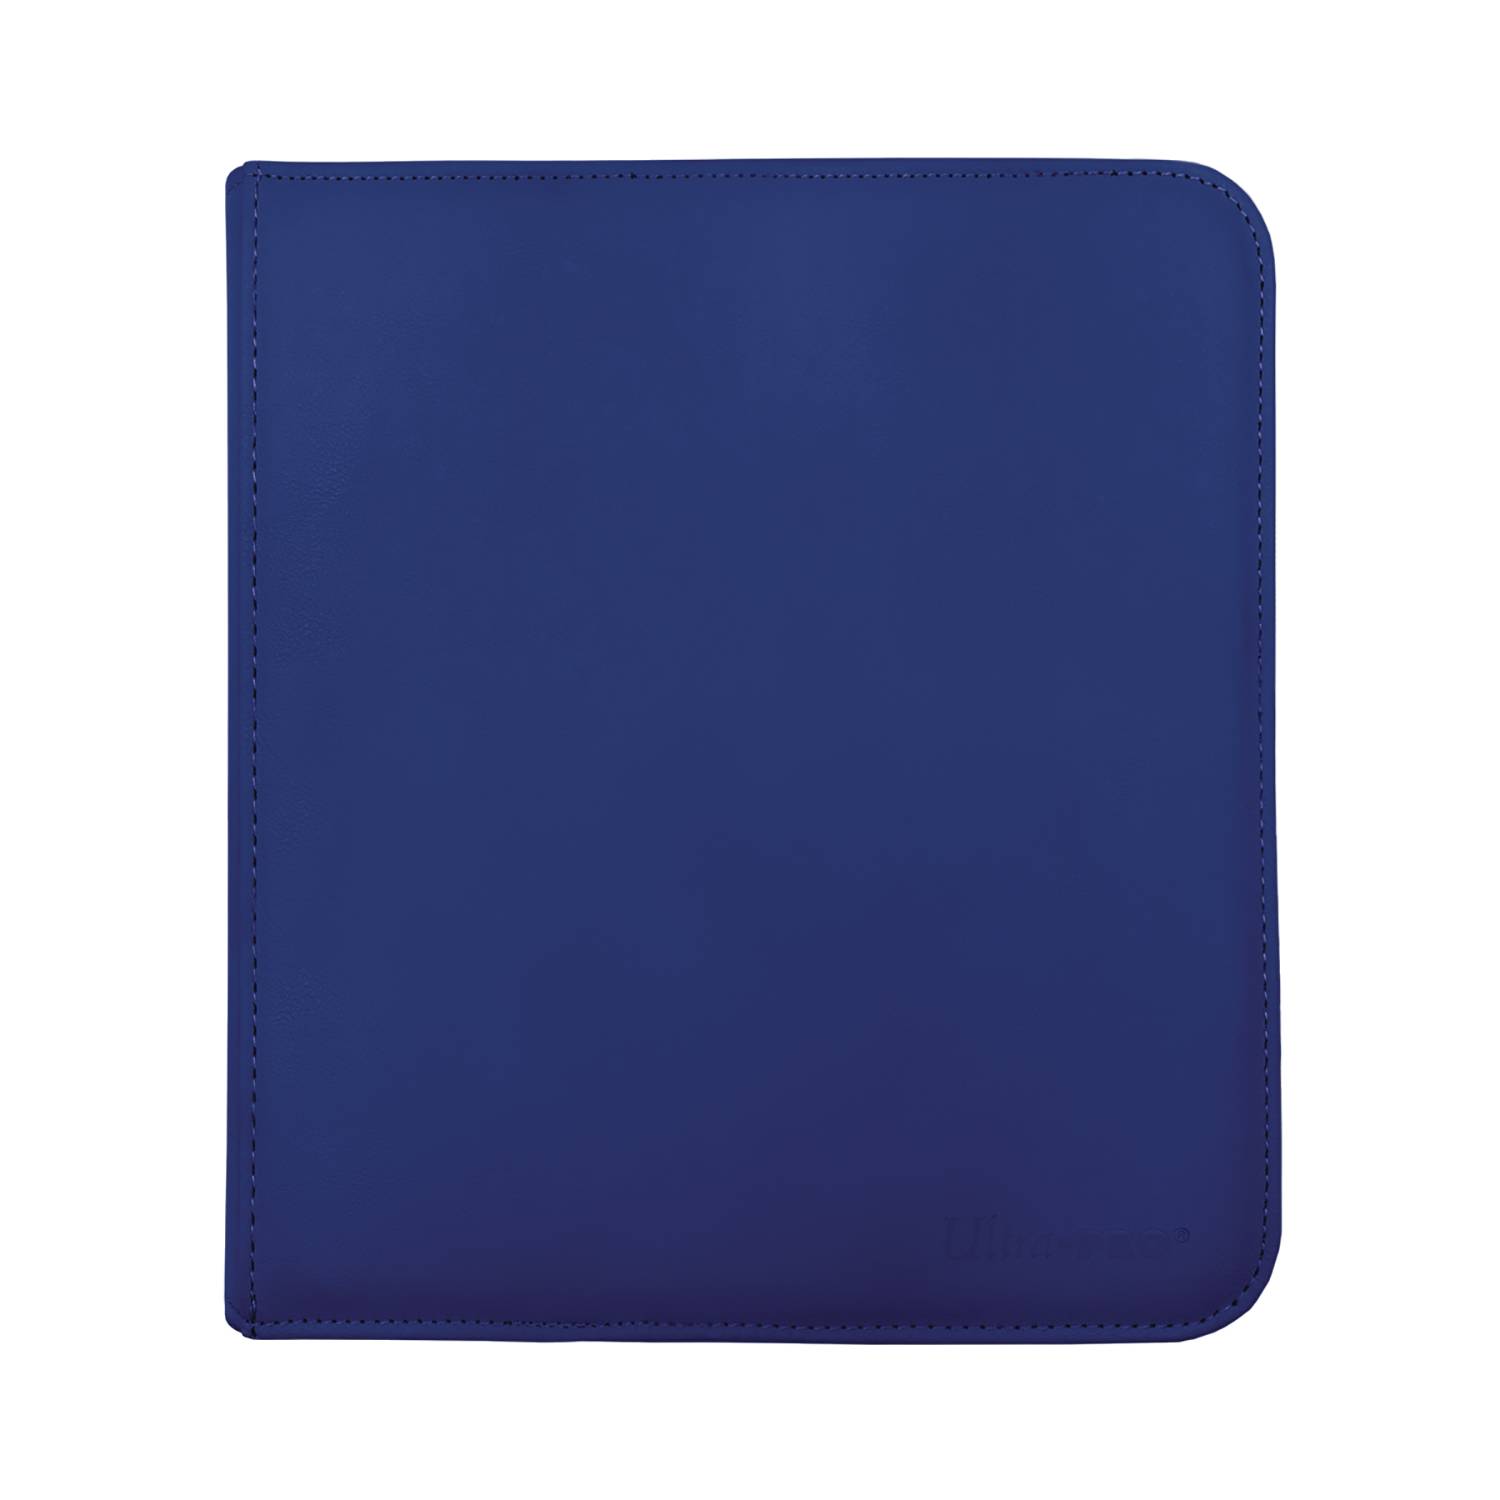 JAN218181 - 12 POCKET ZIPPERED PRO BINDER BLUE - Previews World